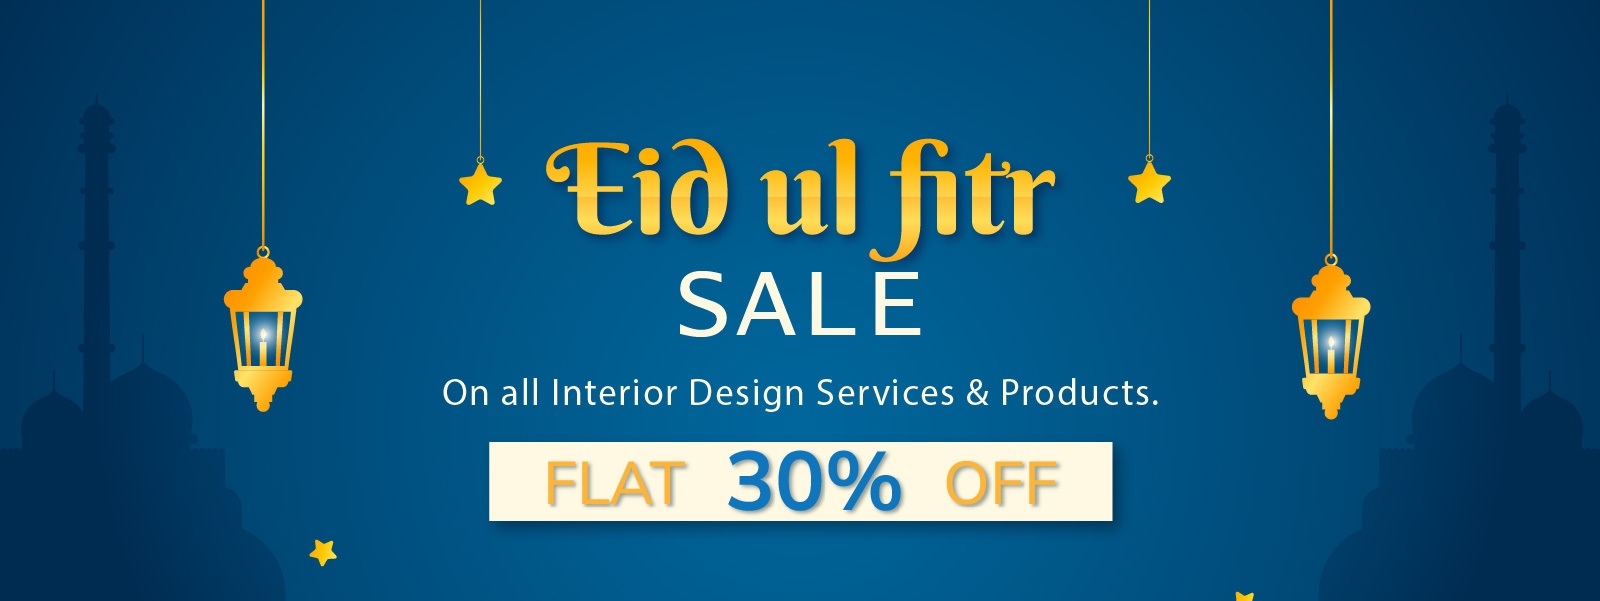 Sale banner for eid ul fitar